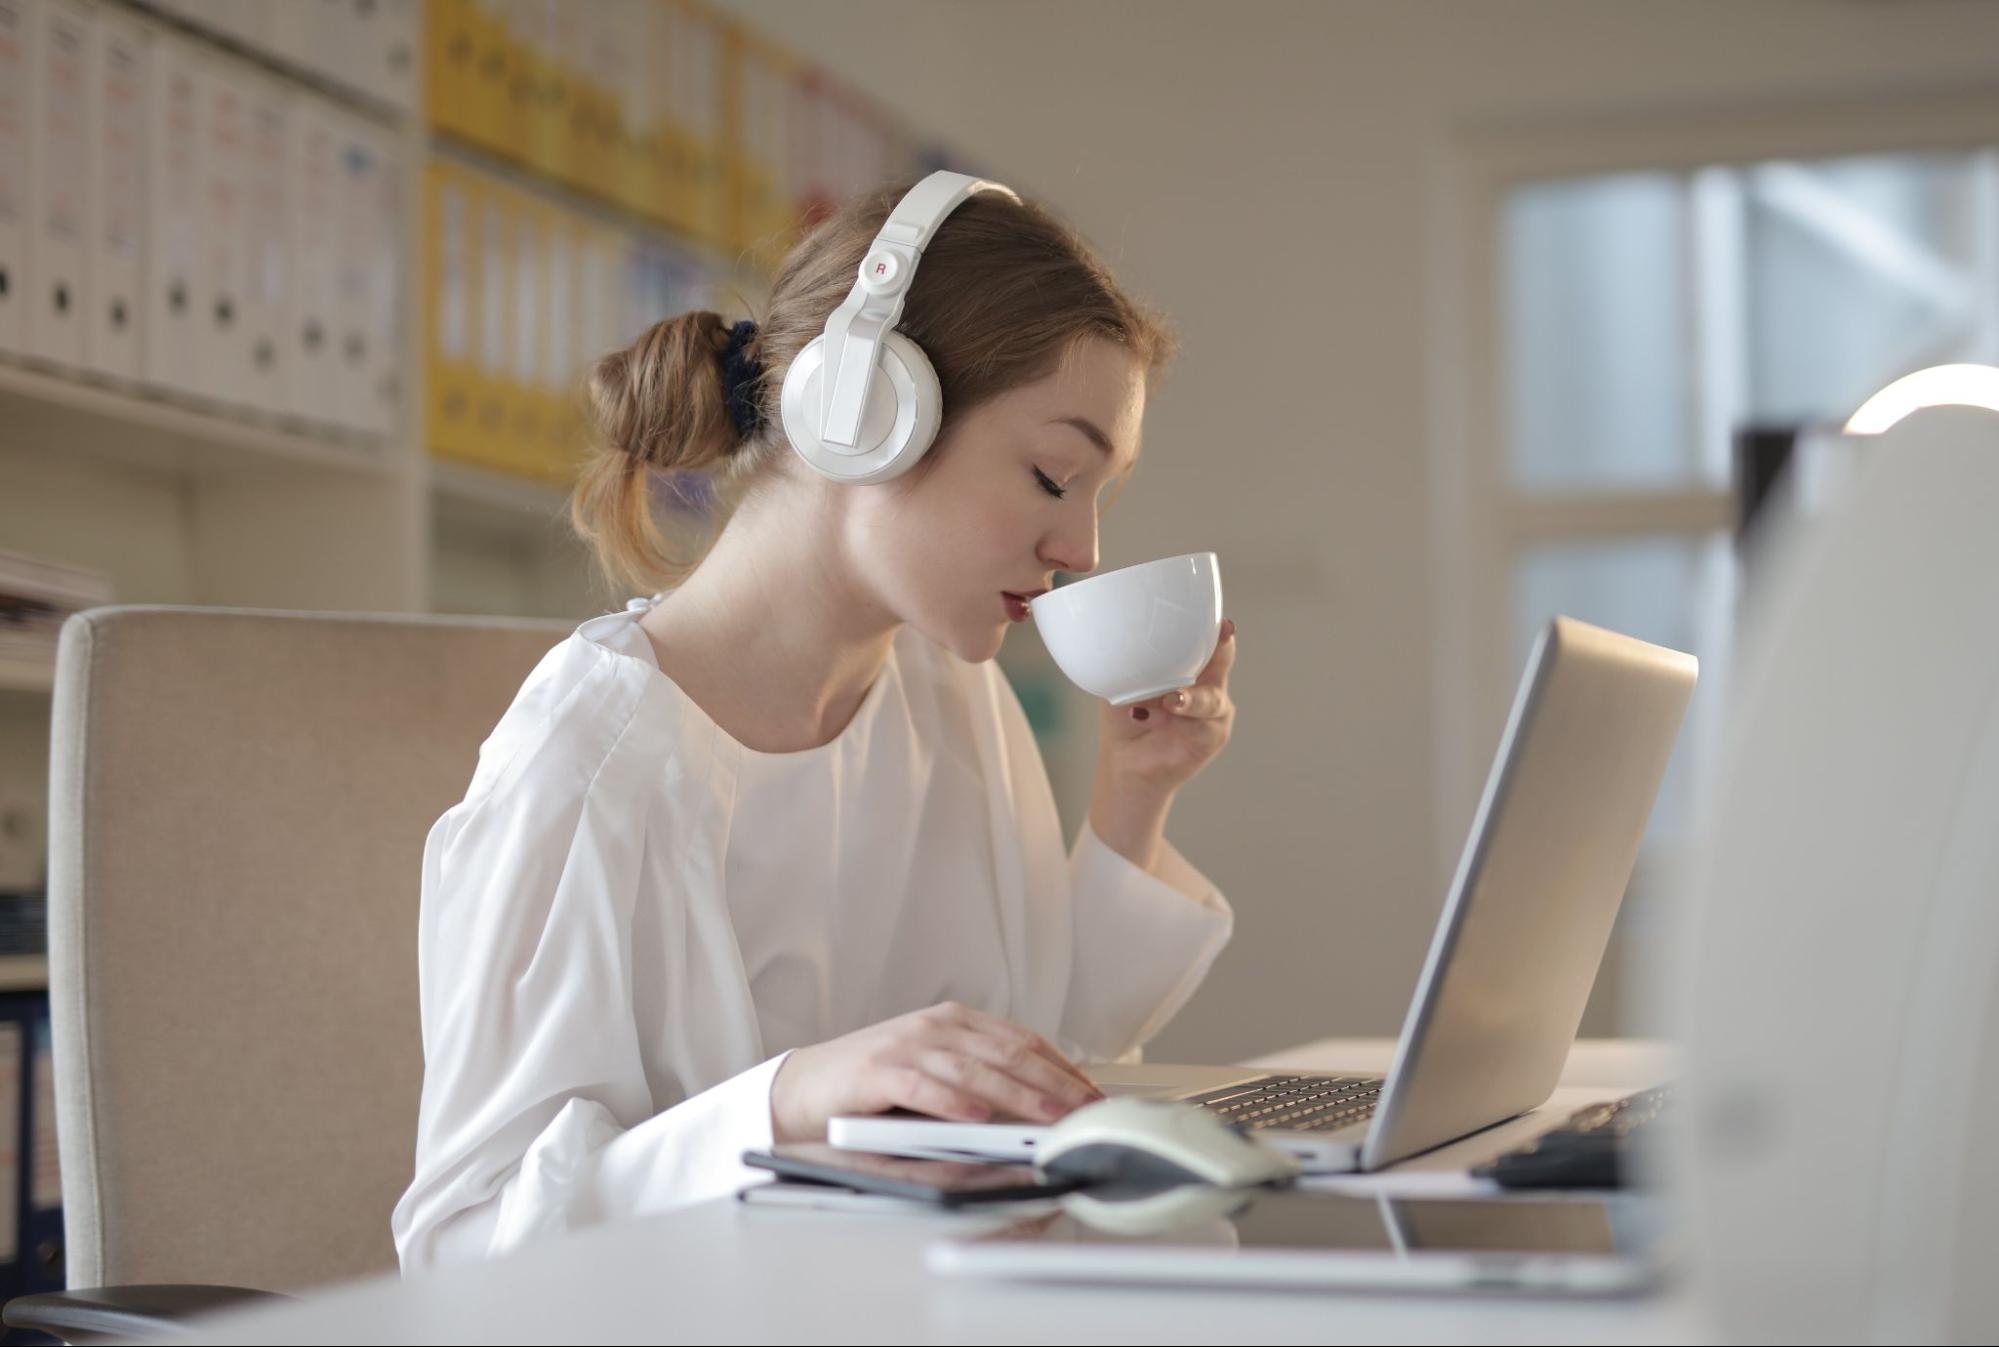 Person wearing headphones drinking coffee